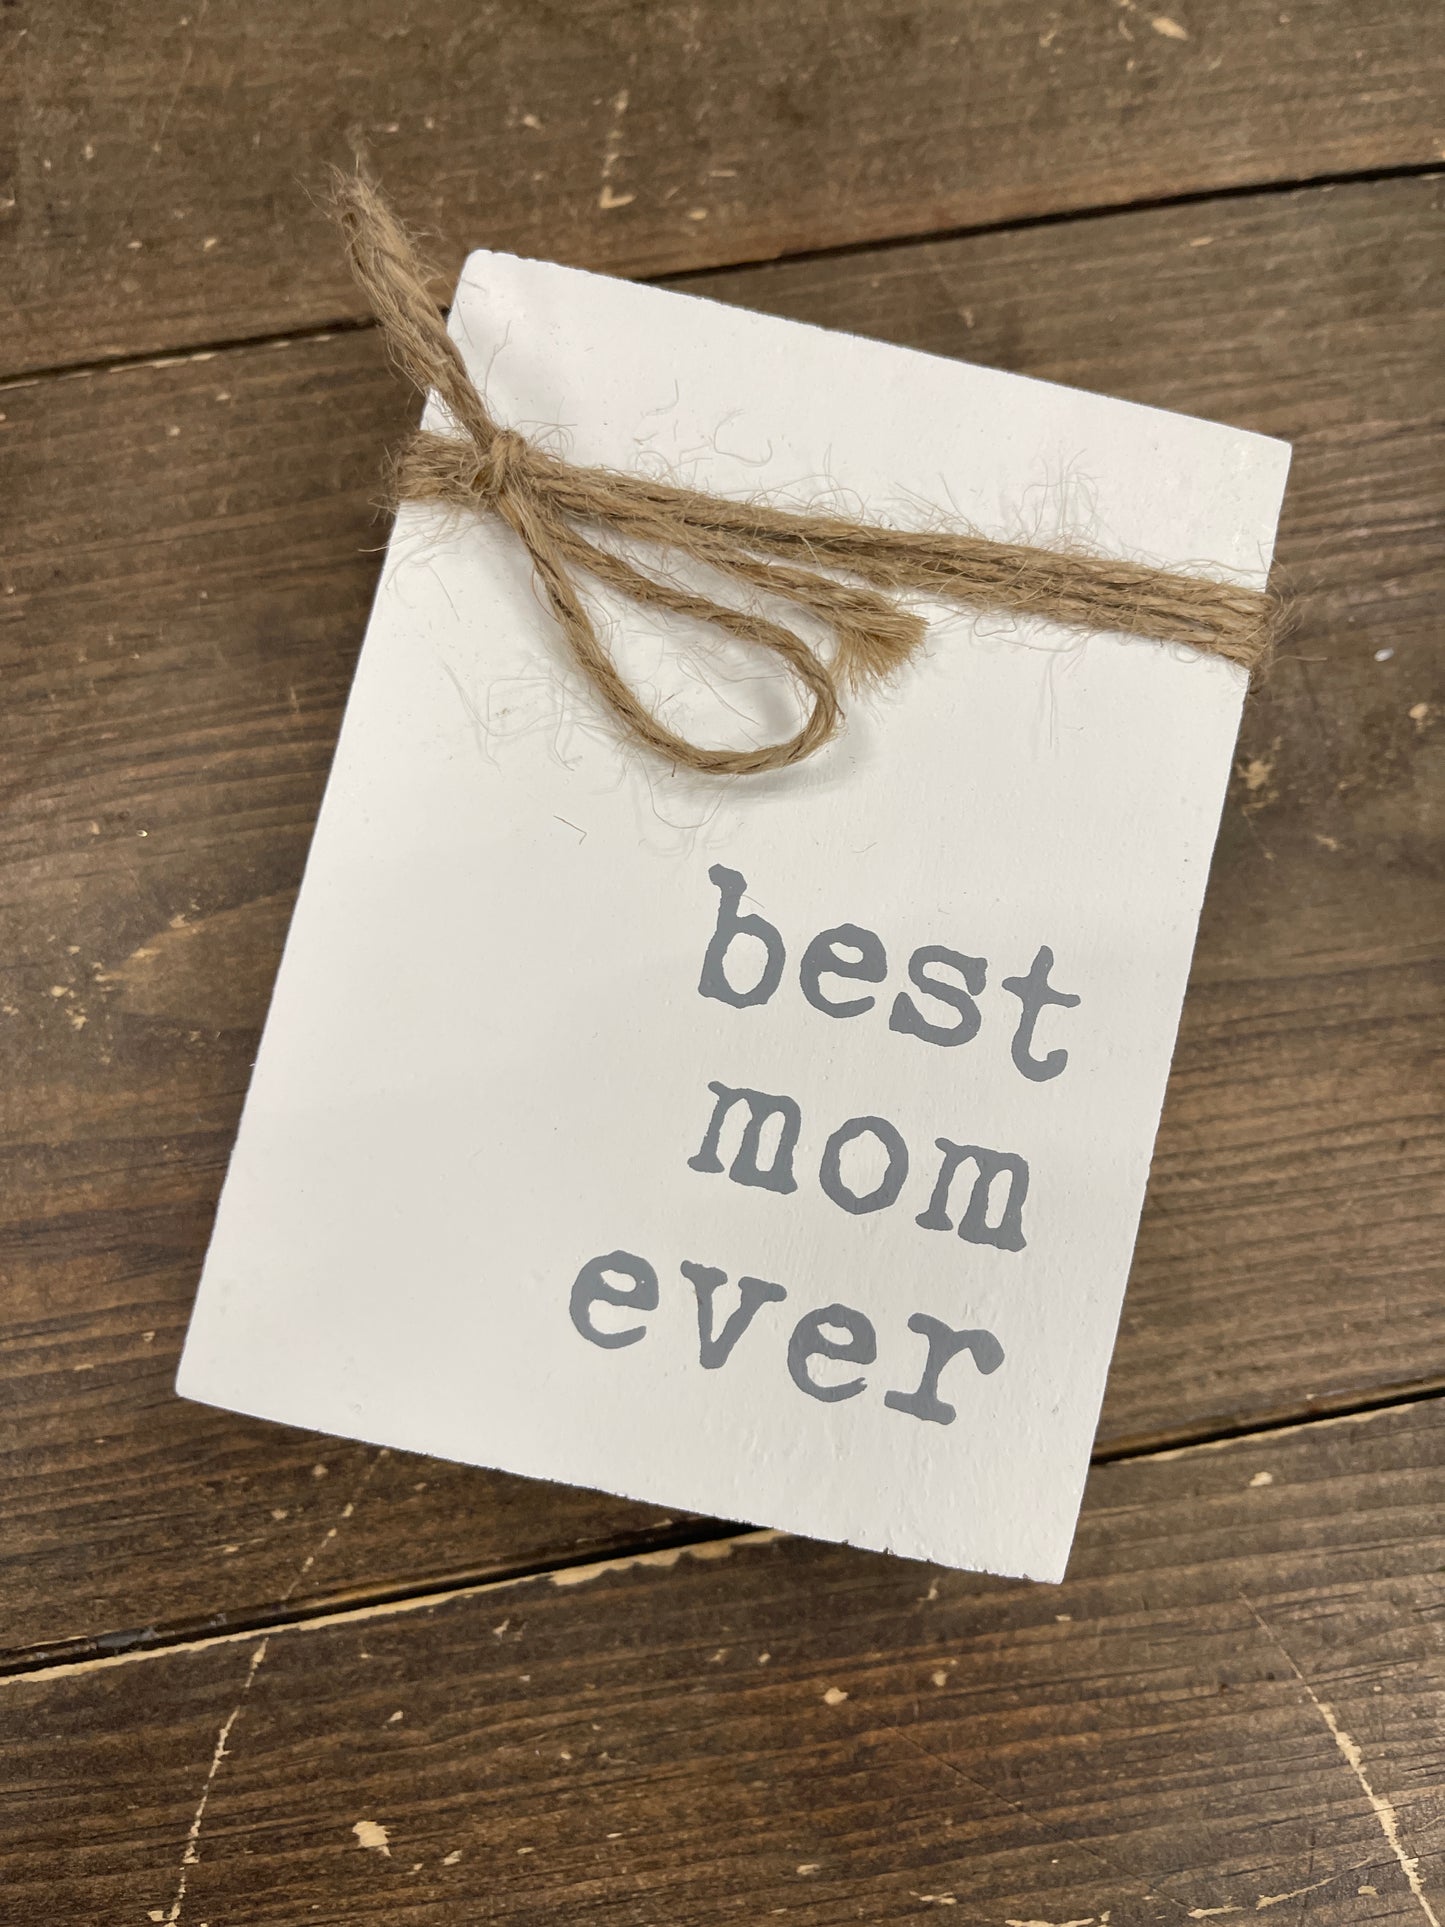 Best ___ Ever (Mom, Bonus Mom, Friend, Etc)